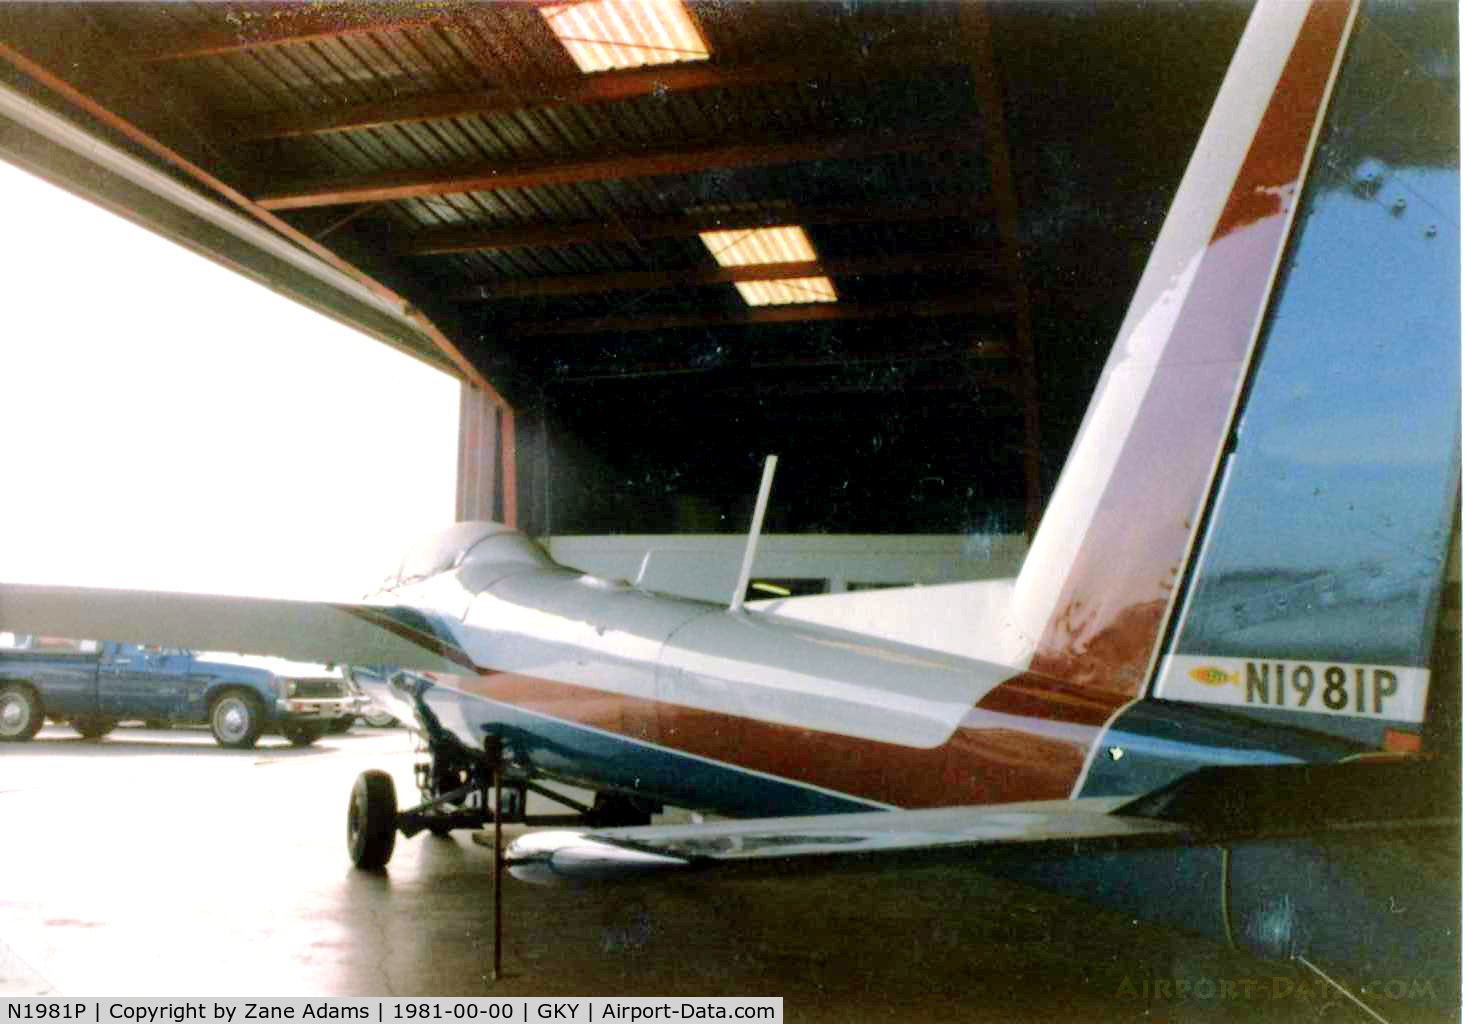 N1981P, Bede BD-2 C/N 01, World Record holder - http://records.fai.org/general_aviation/aircraft.asp?id=872